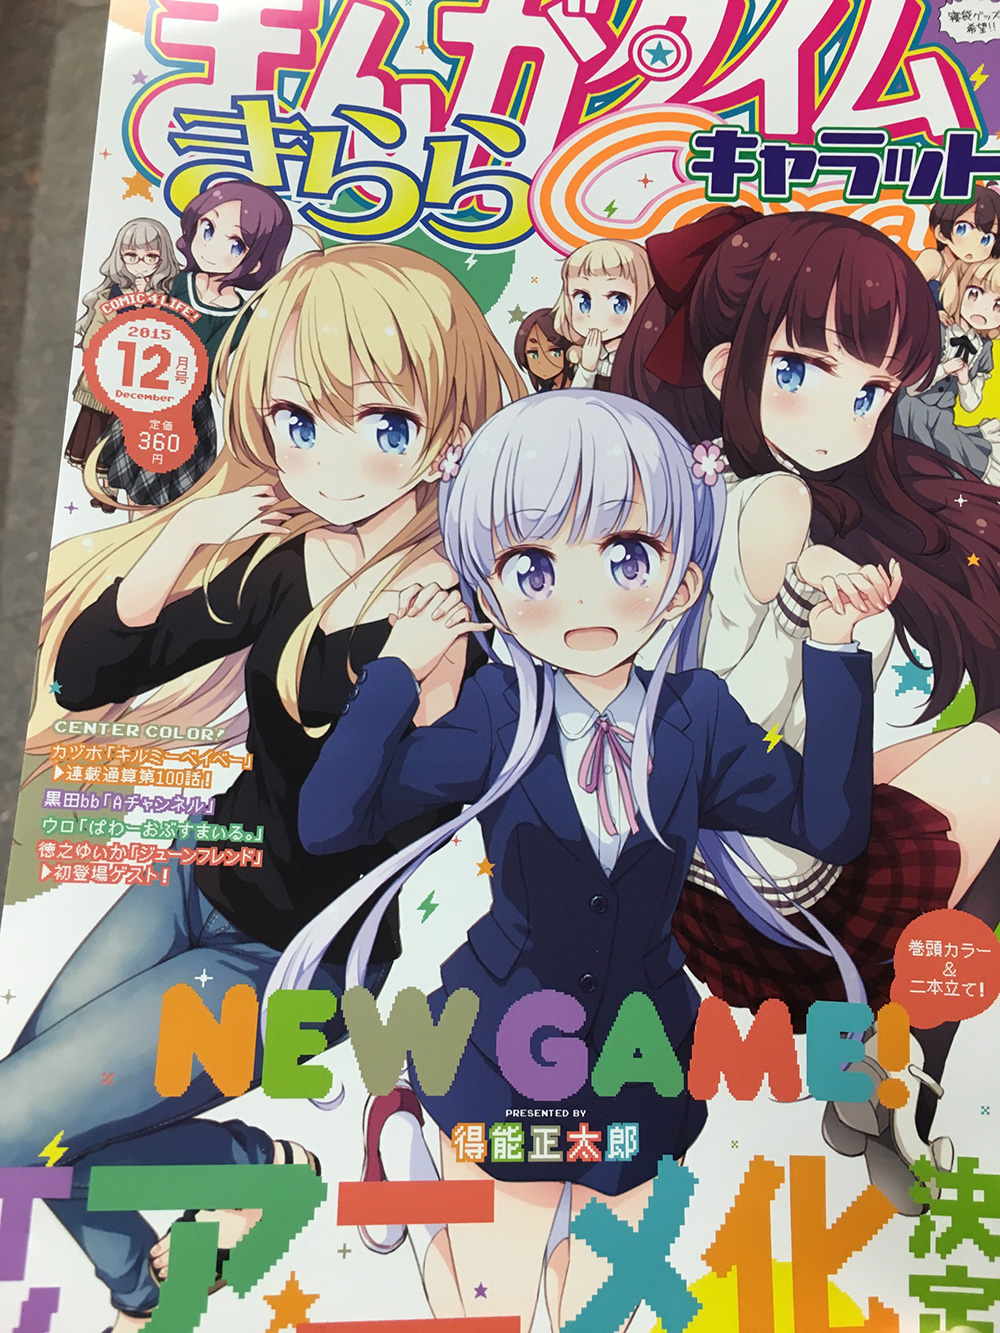 New Game! Anime Adaptation Announced - Cute Girls Making Games - Otaku Tale